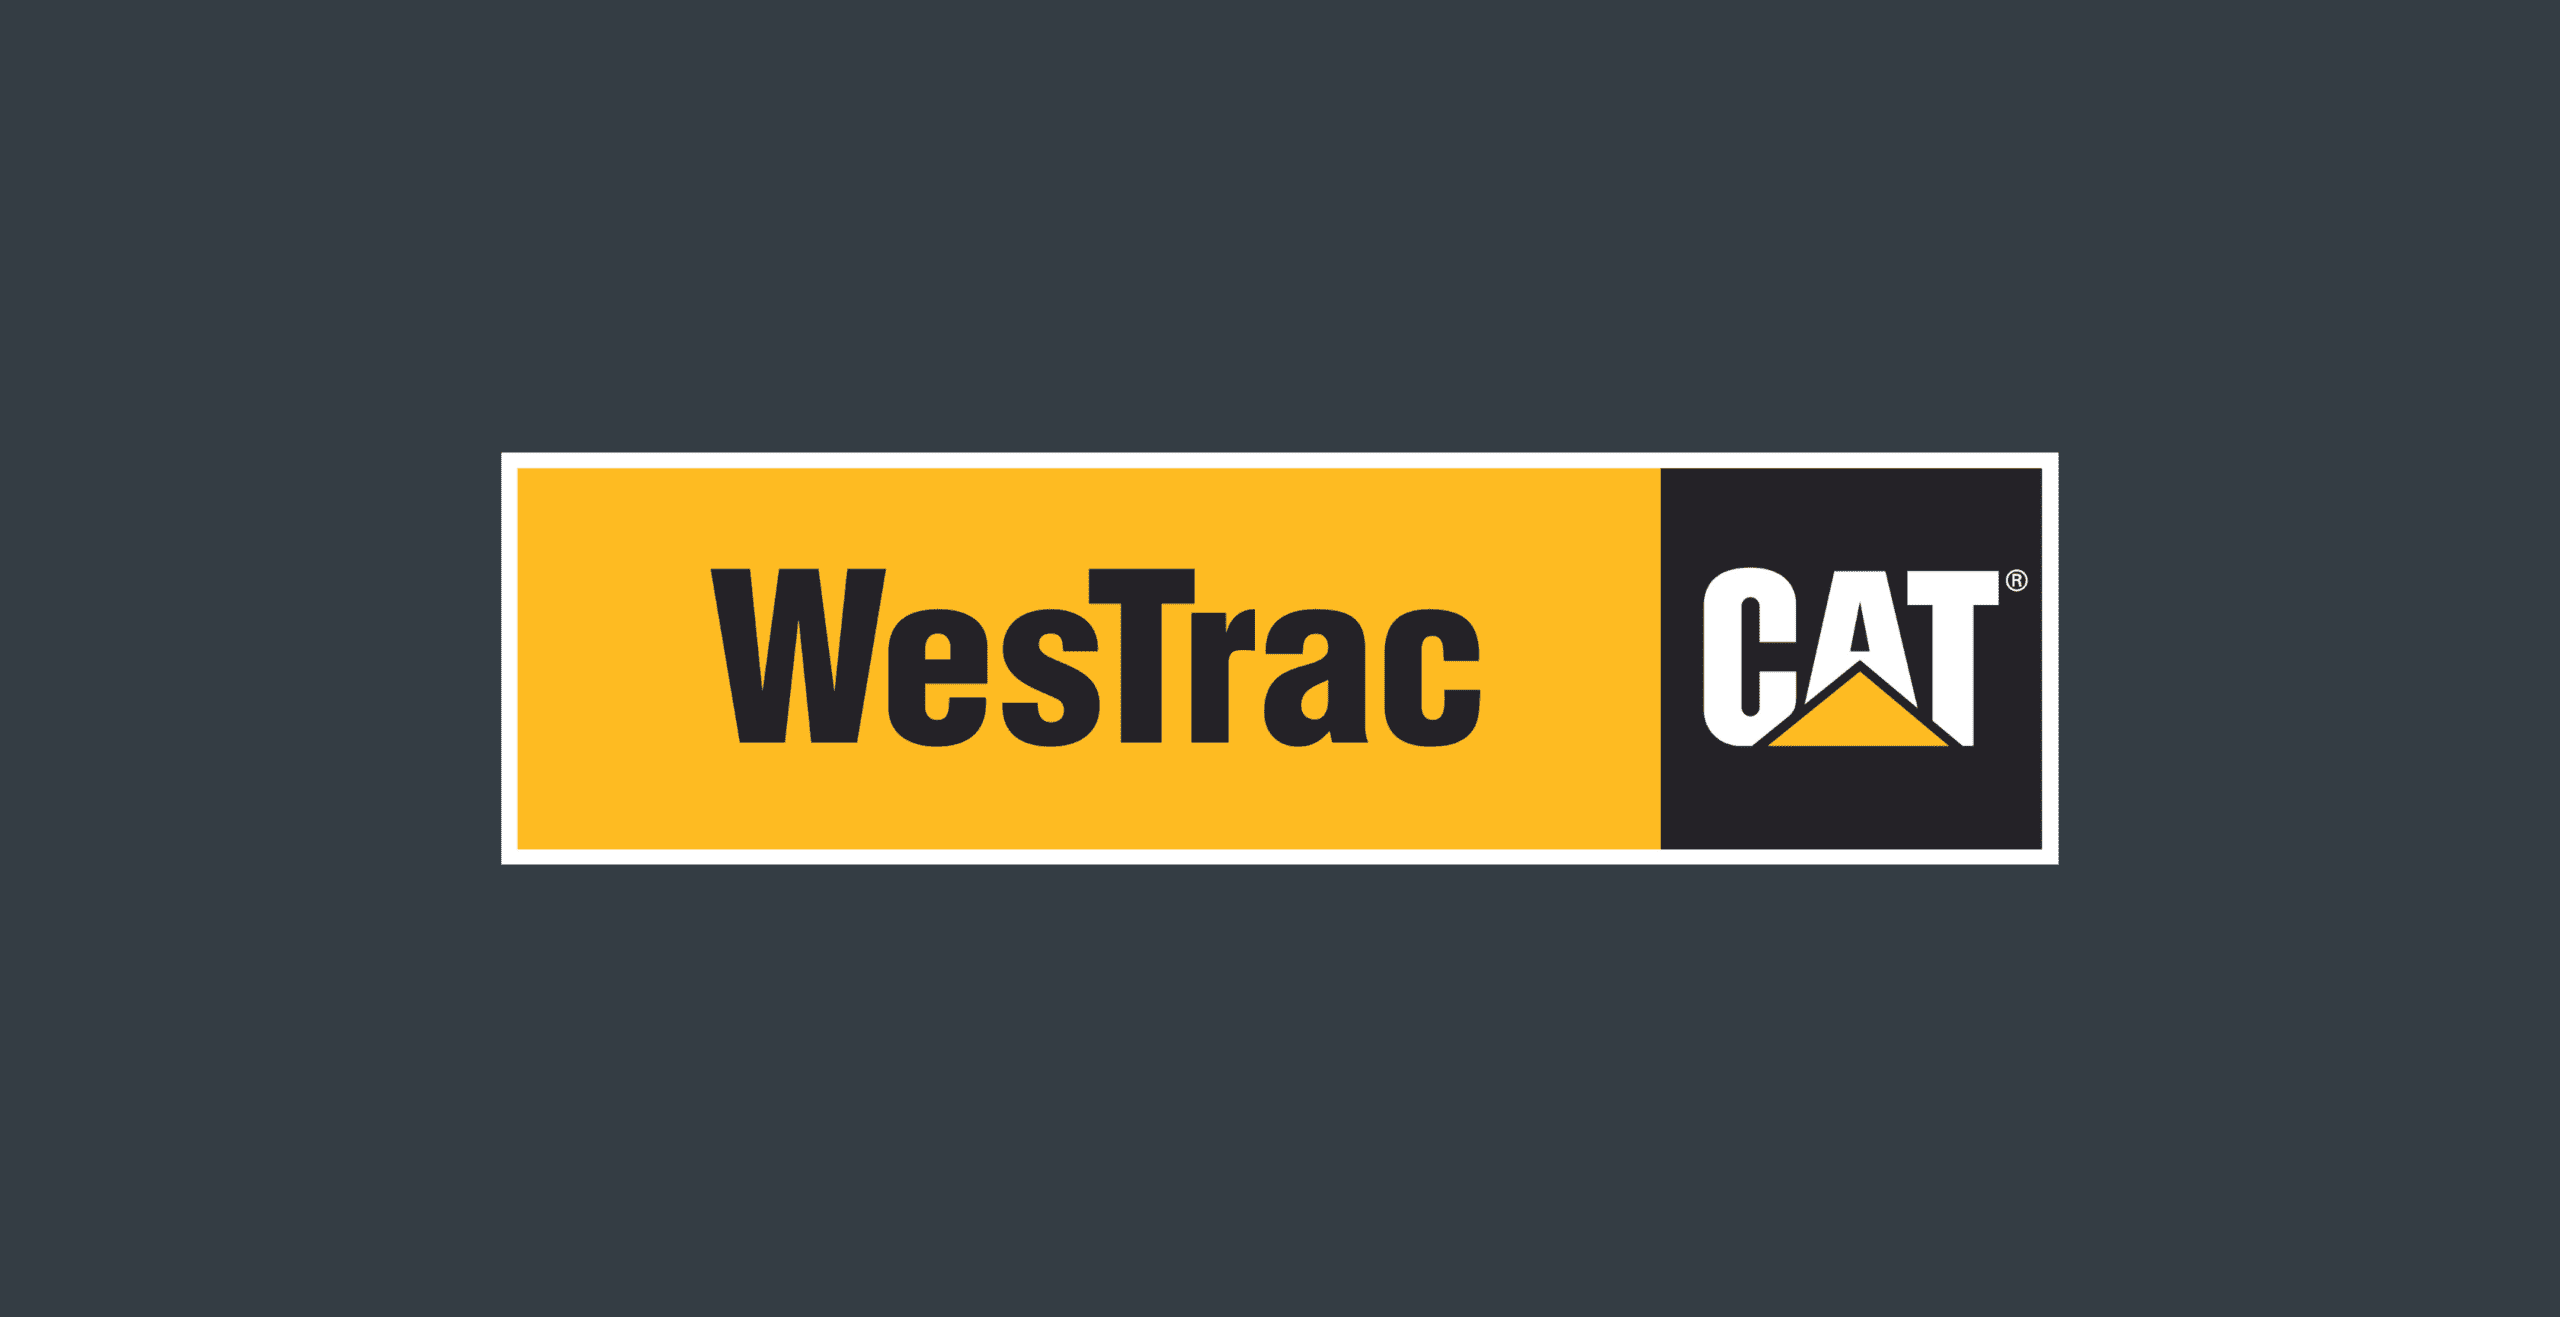 This image represents the brand Westrec cat